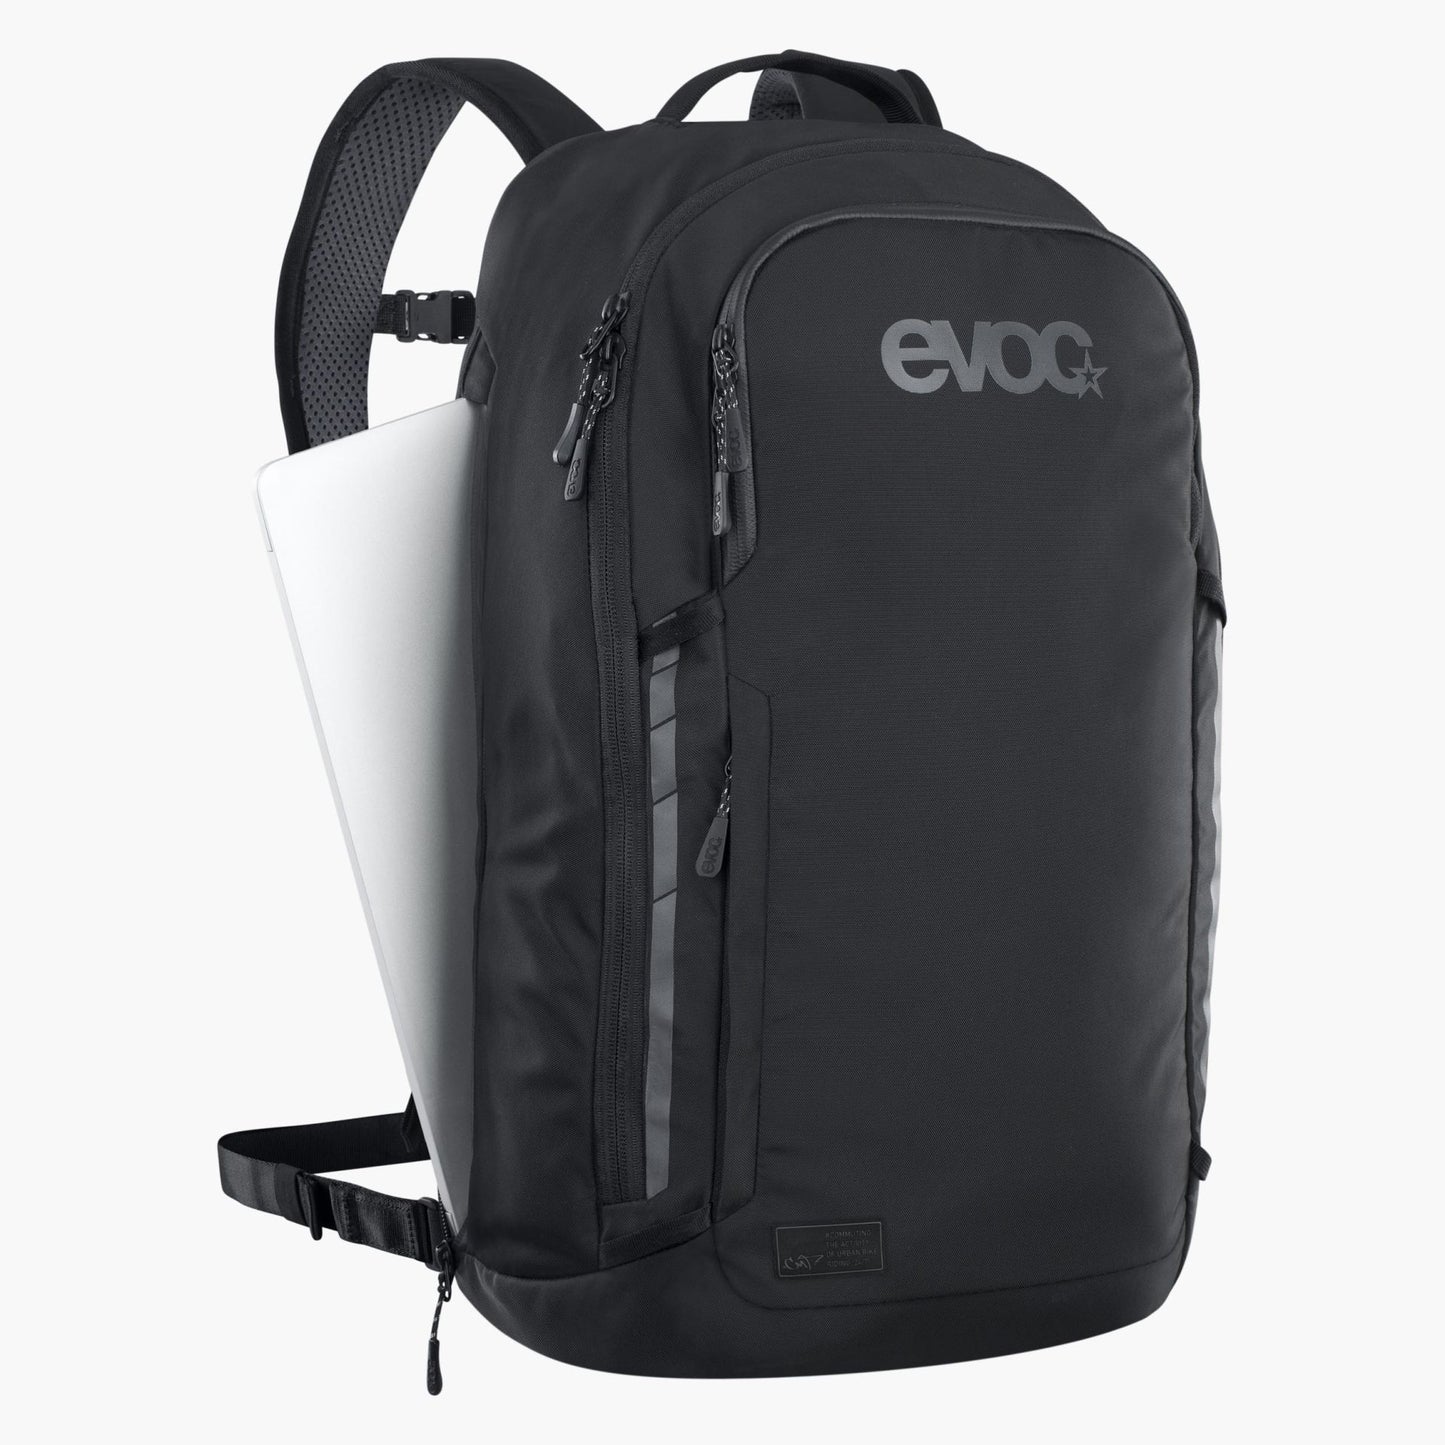 Evoc Commute 22L Backpack, Black